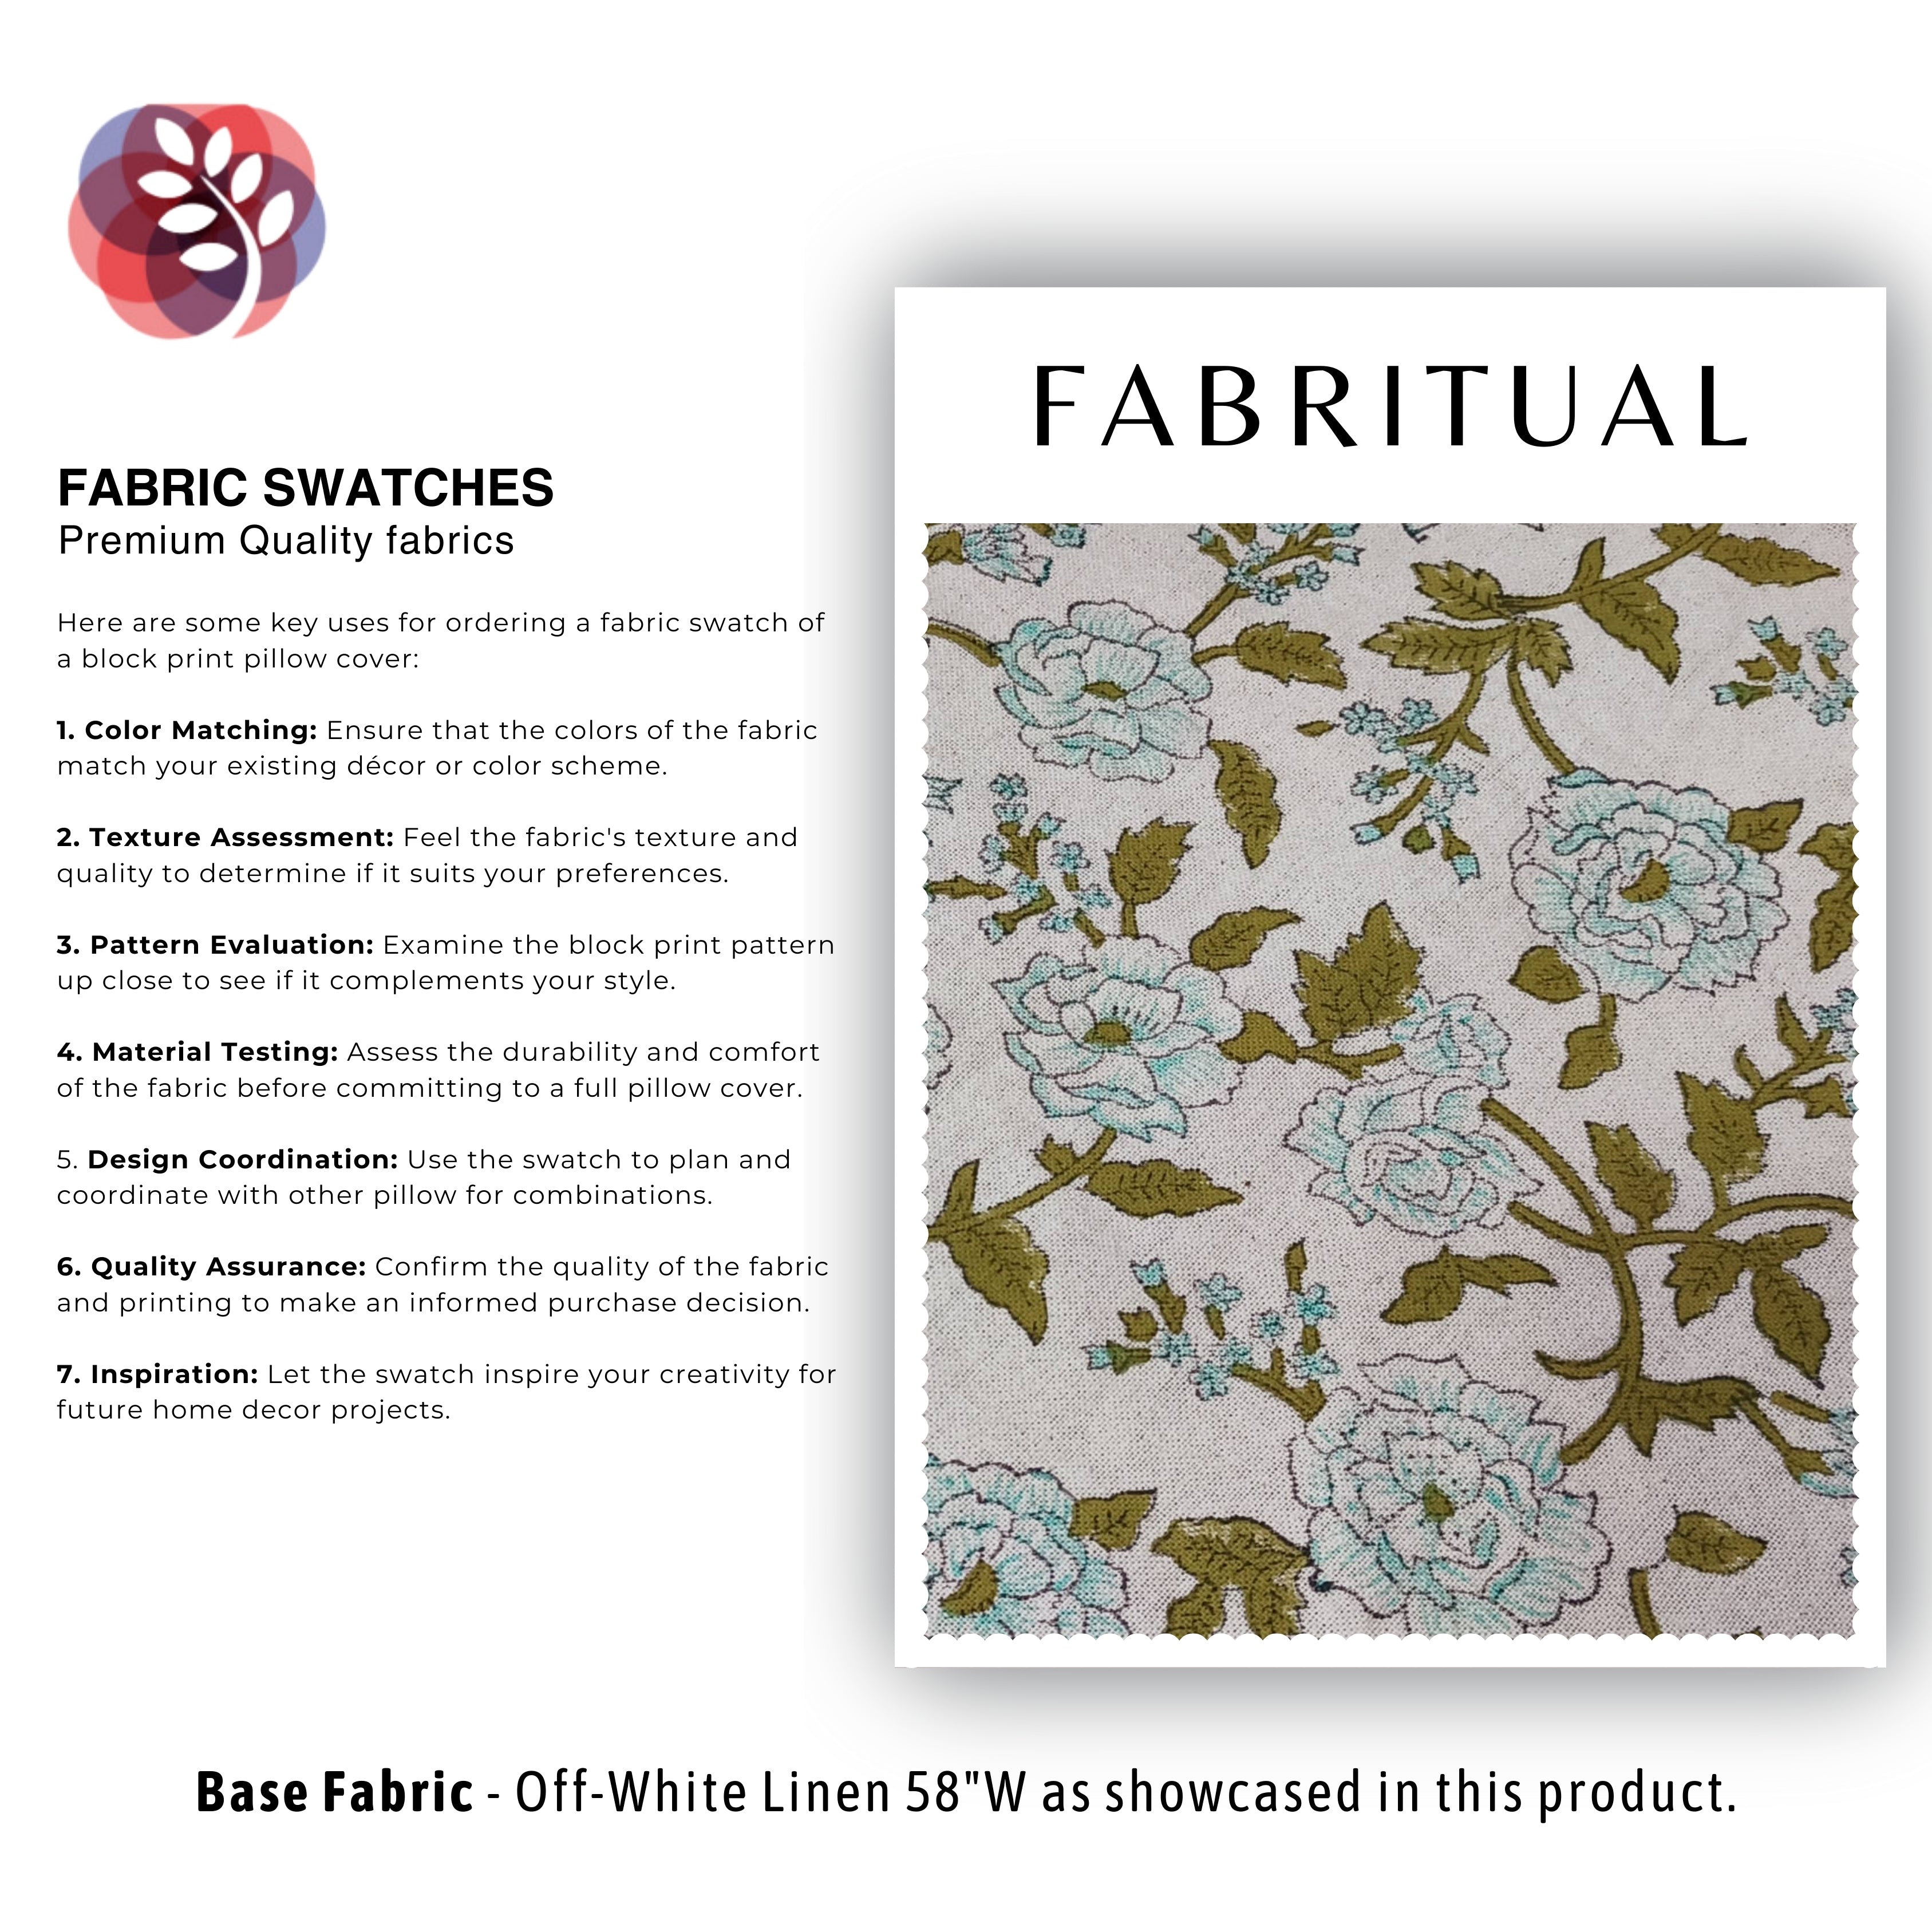 Block Print Linen Fabric, Rameshwaram  Indian Hand Block Fabric, Linen Block Print Textiles, Extra Wide Craft Fabric By The Yard, Floral Print Fabric Linen